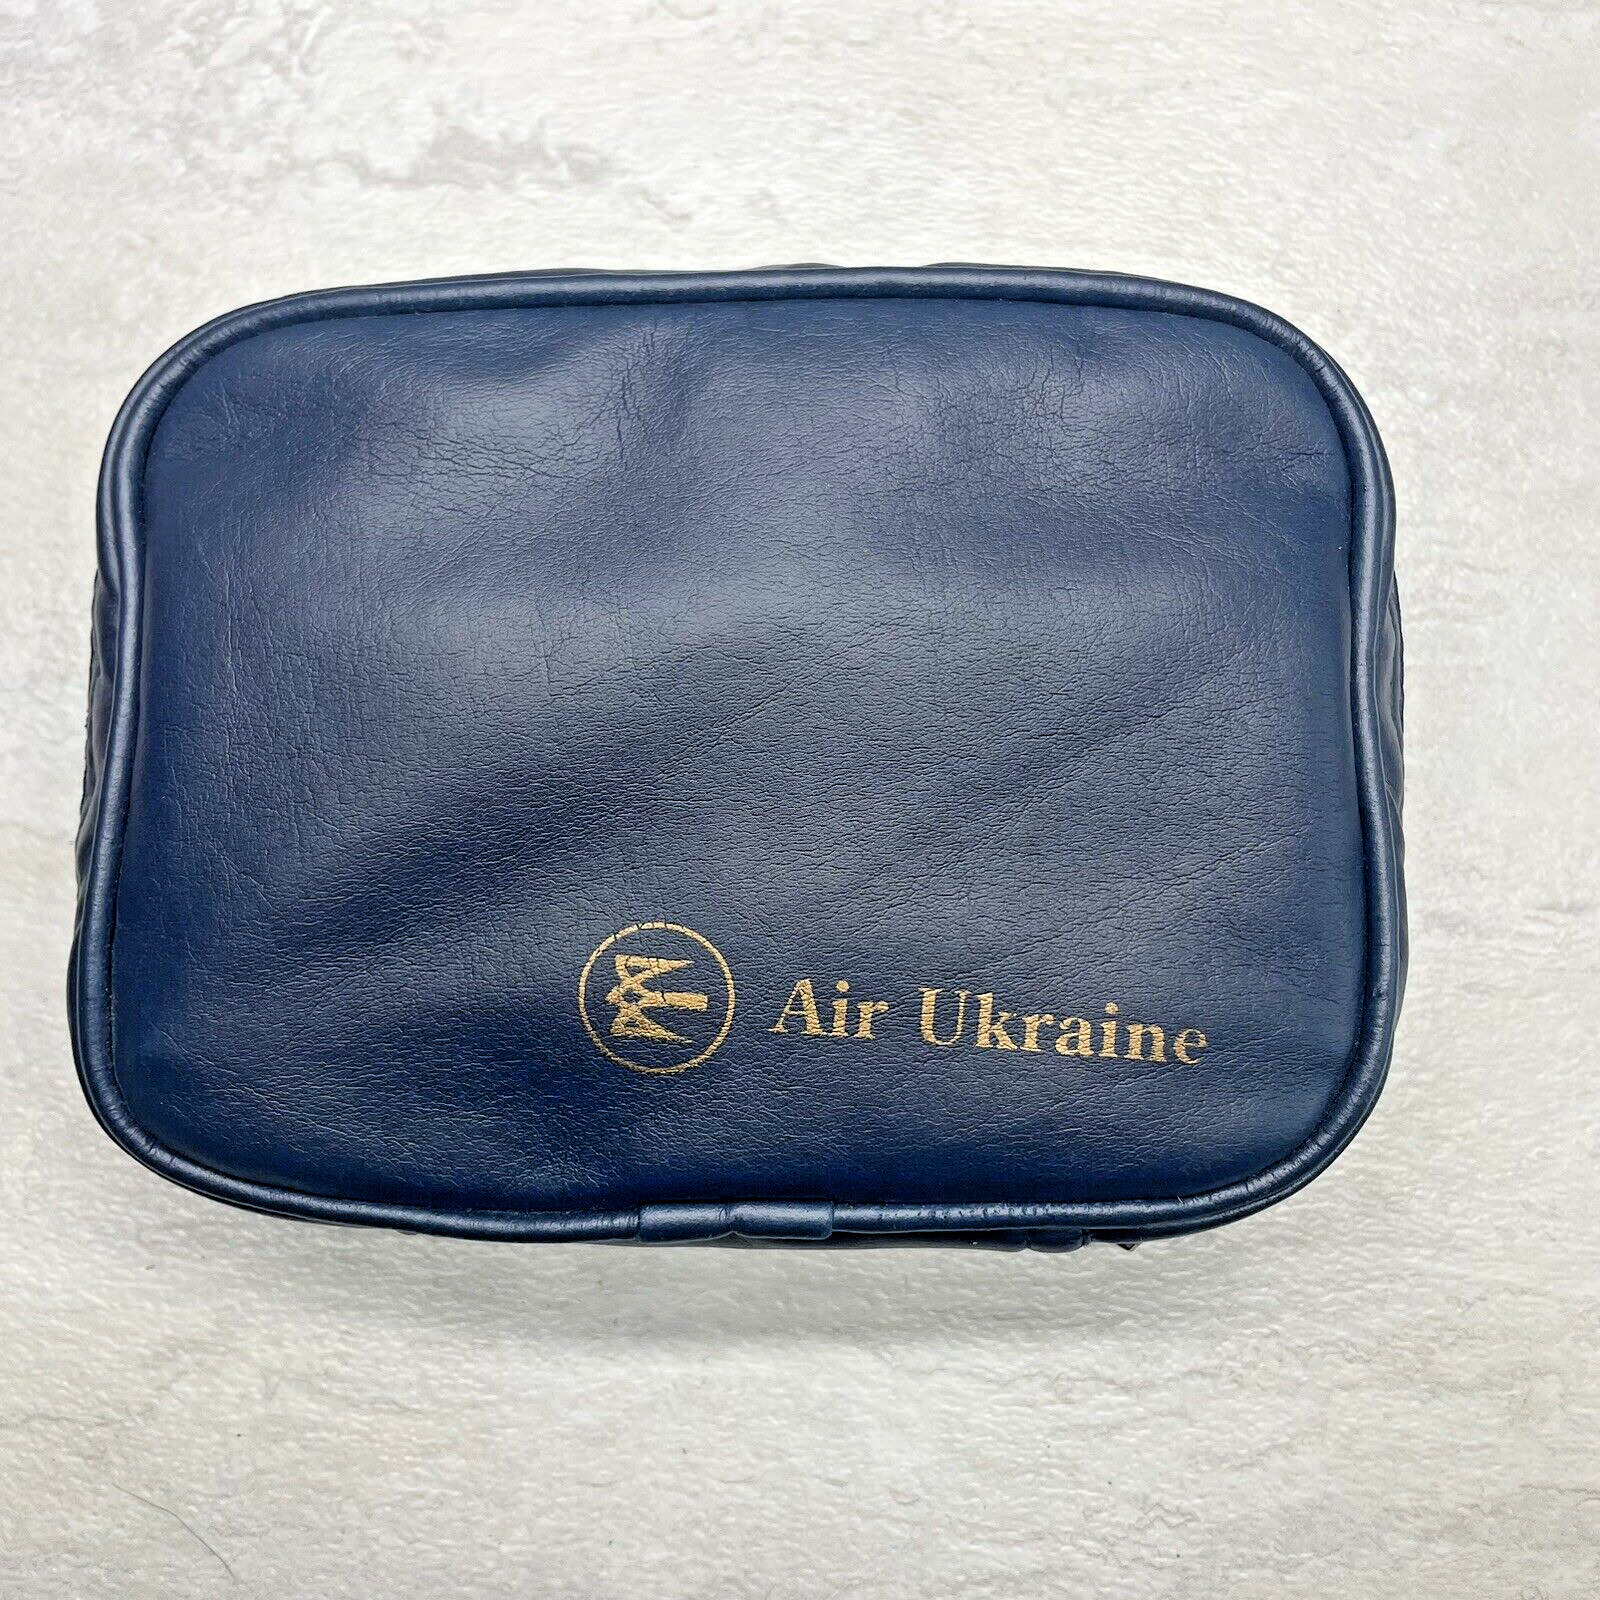 Air Ukraine Airline Flight Zippered Toiletry Bag Case - Navy Blue